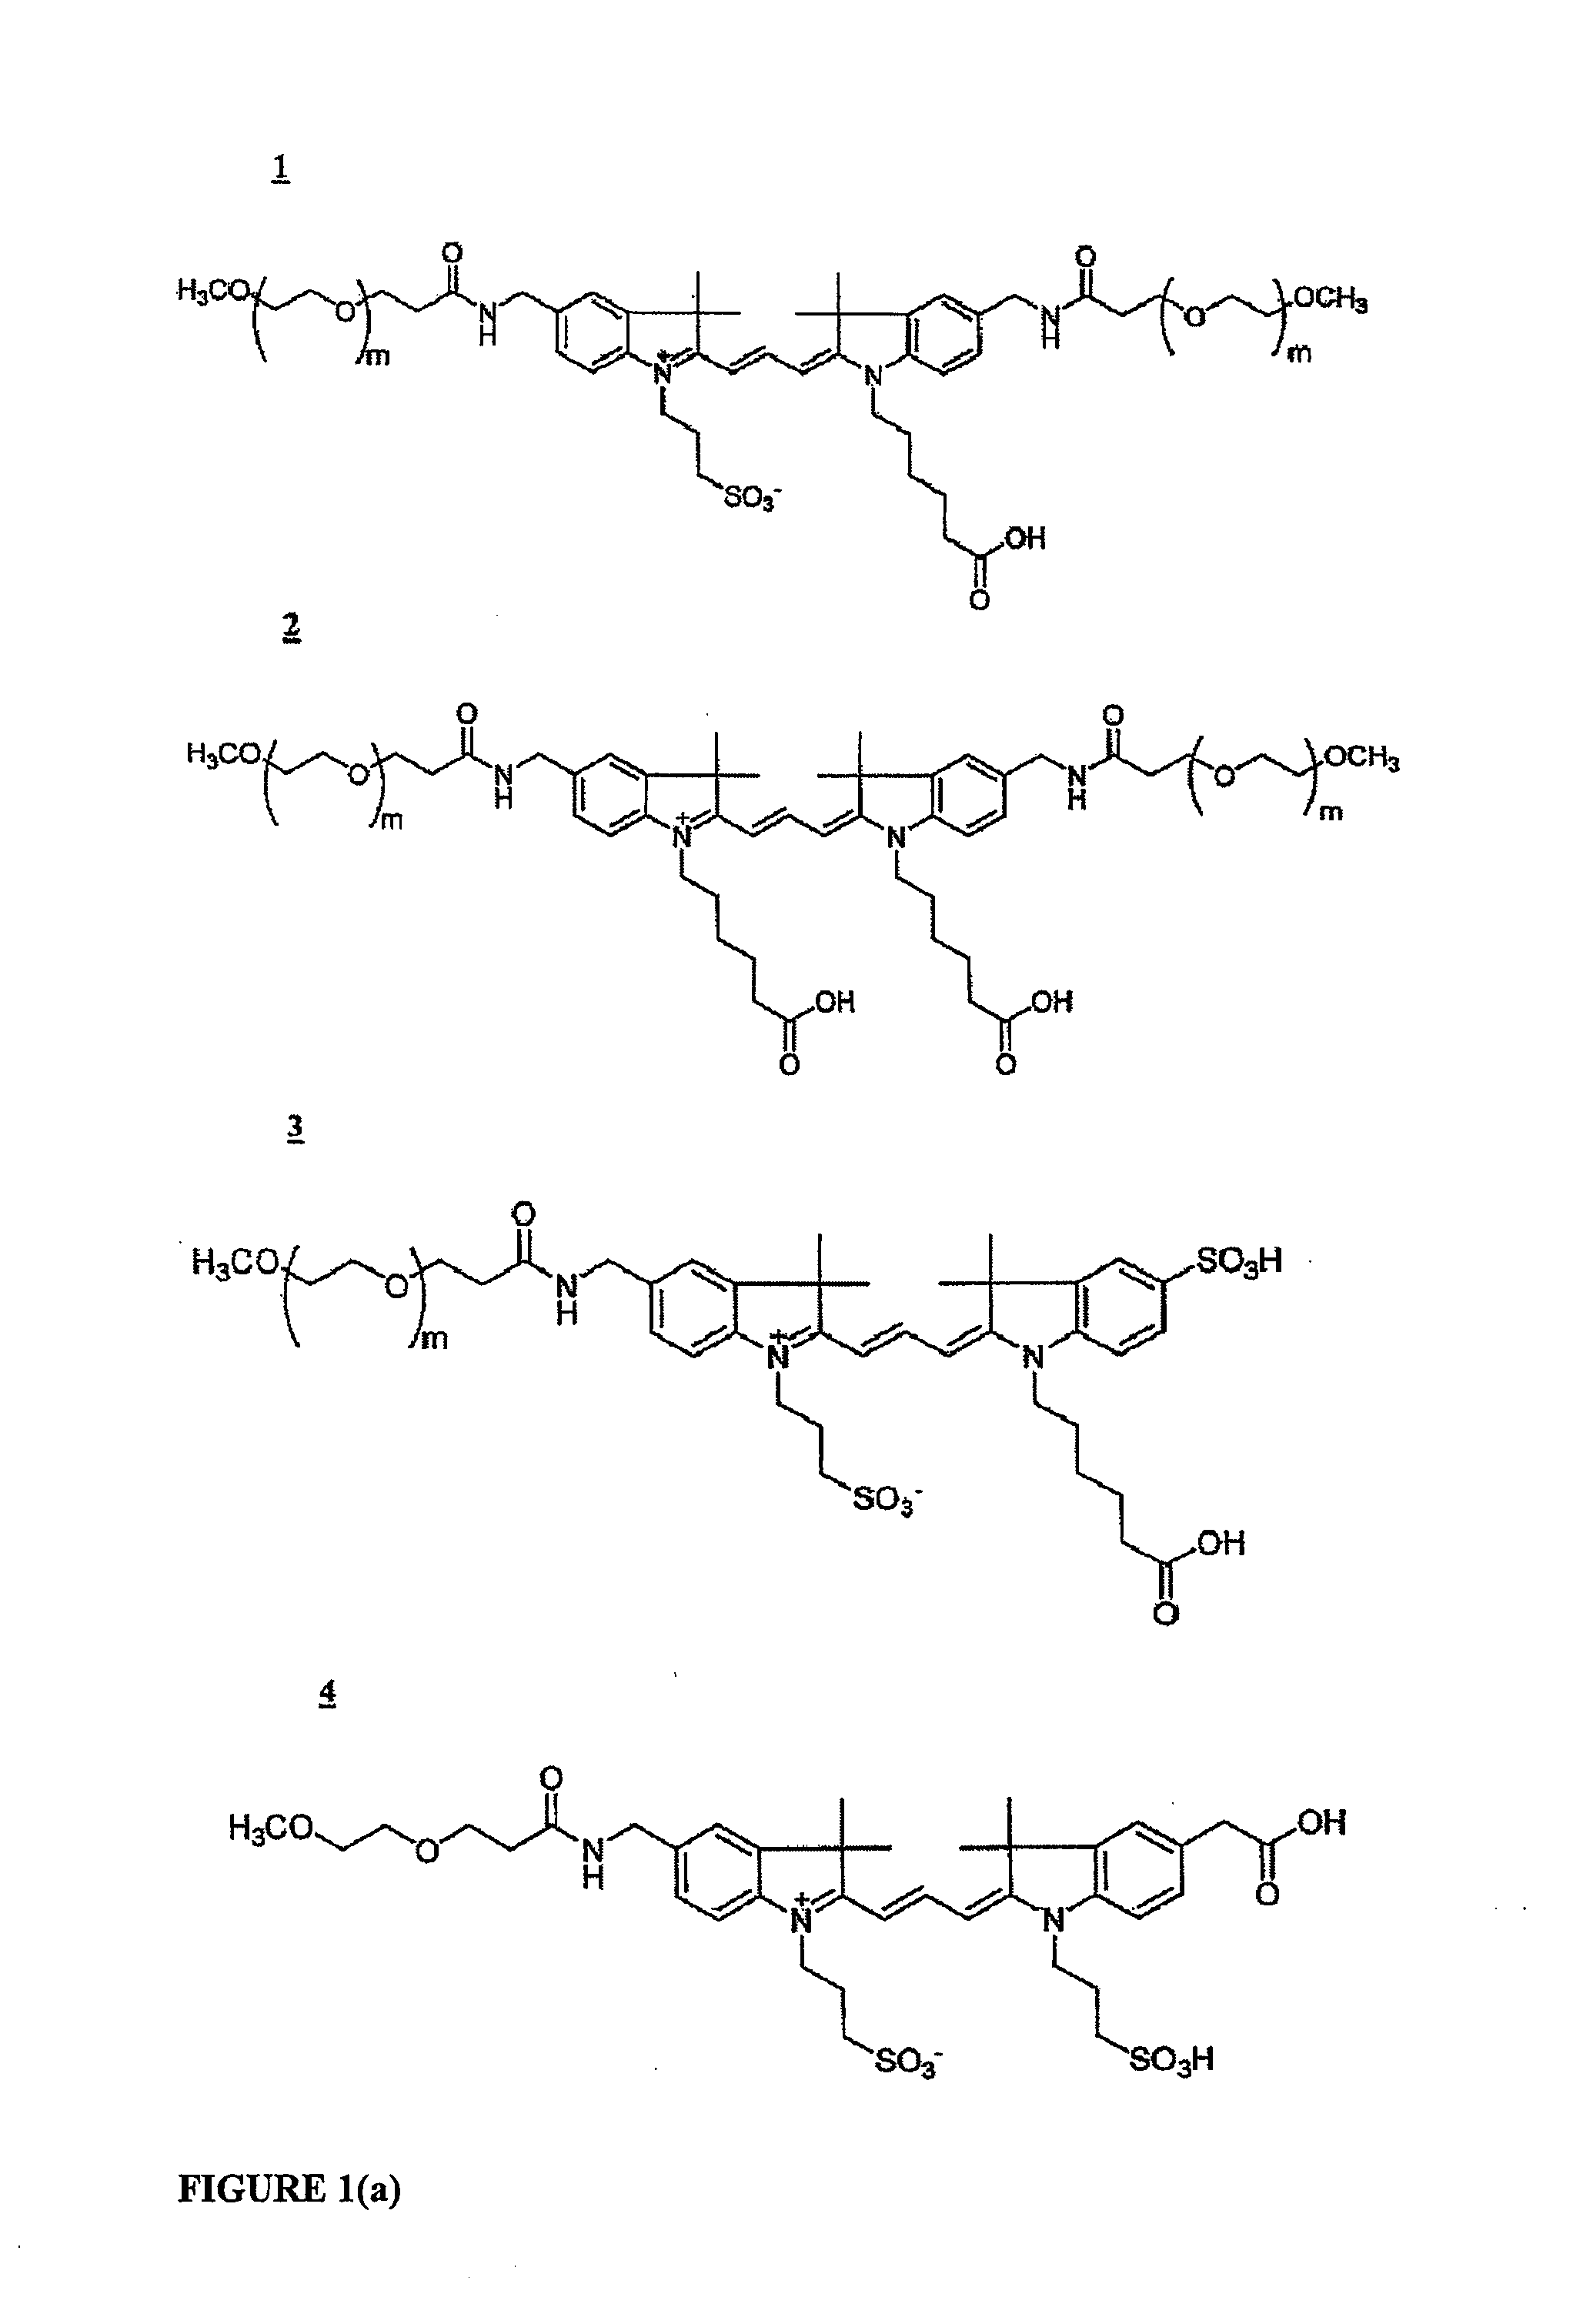 Functionalized cyanine dyes (PEG)